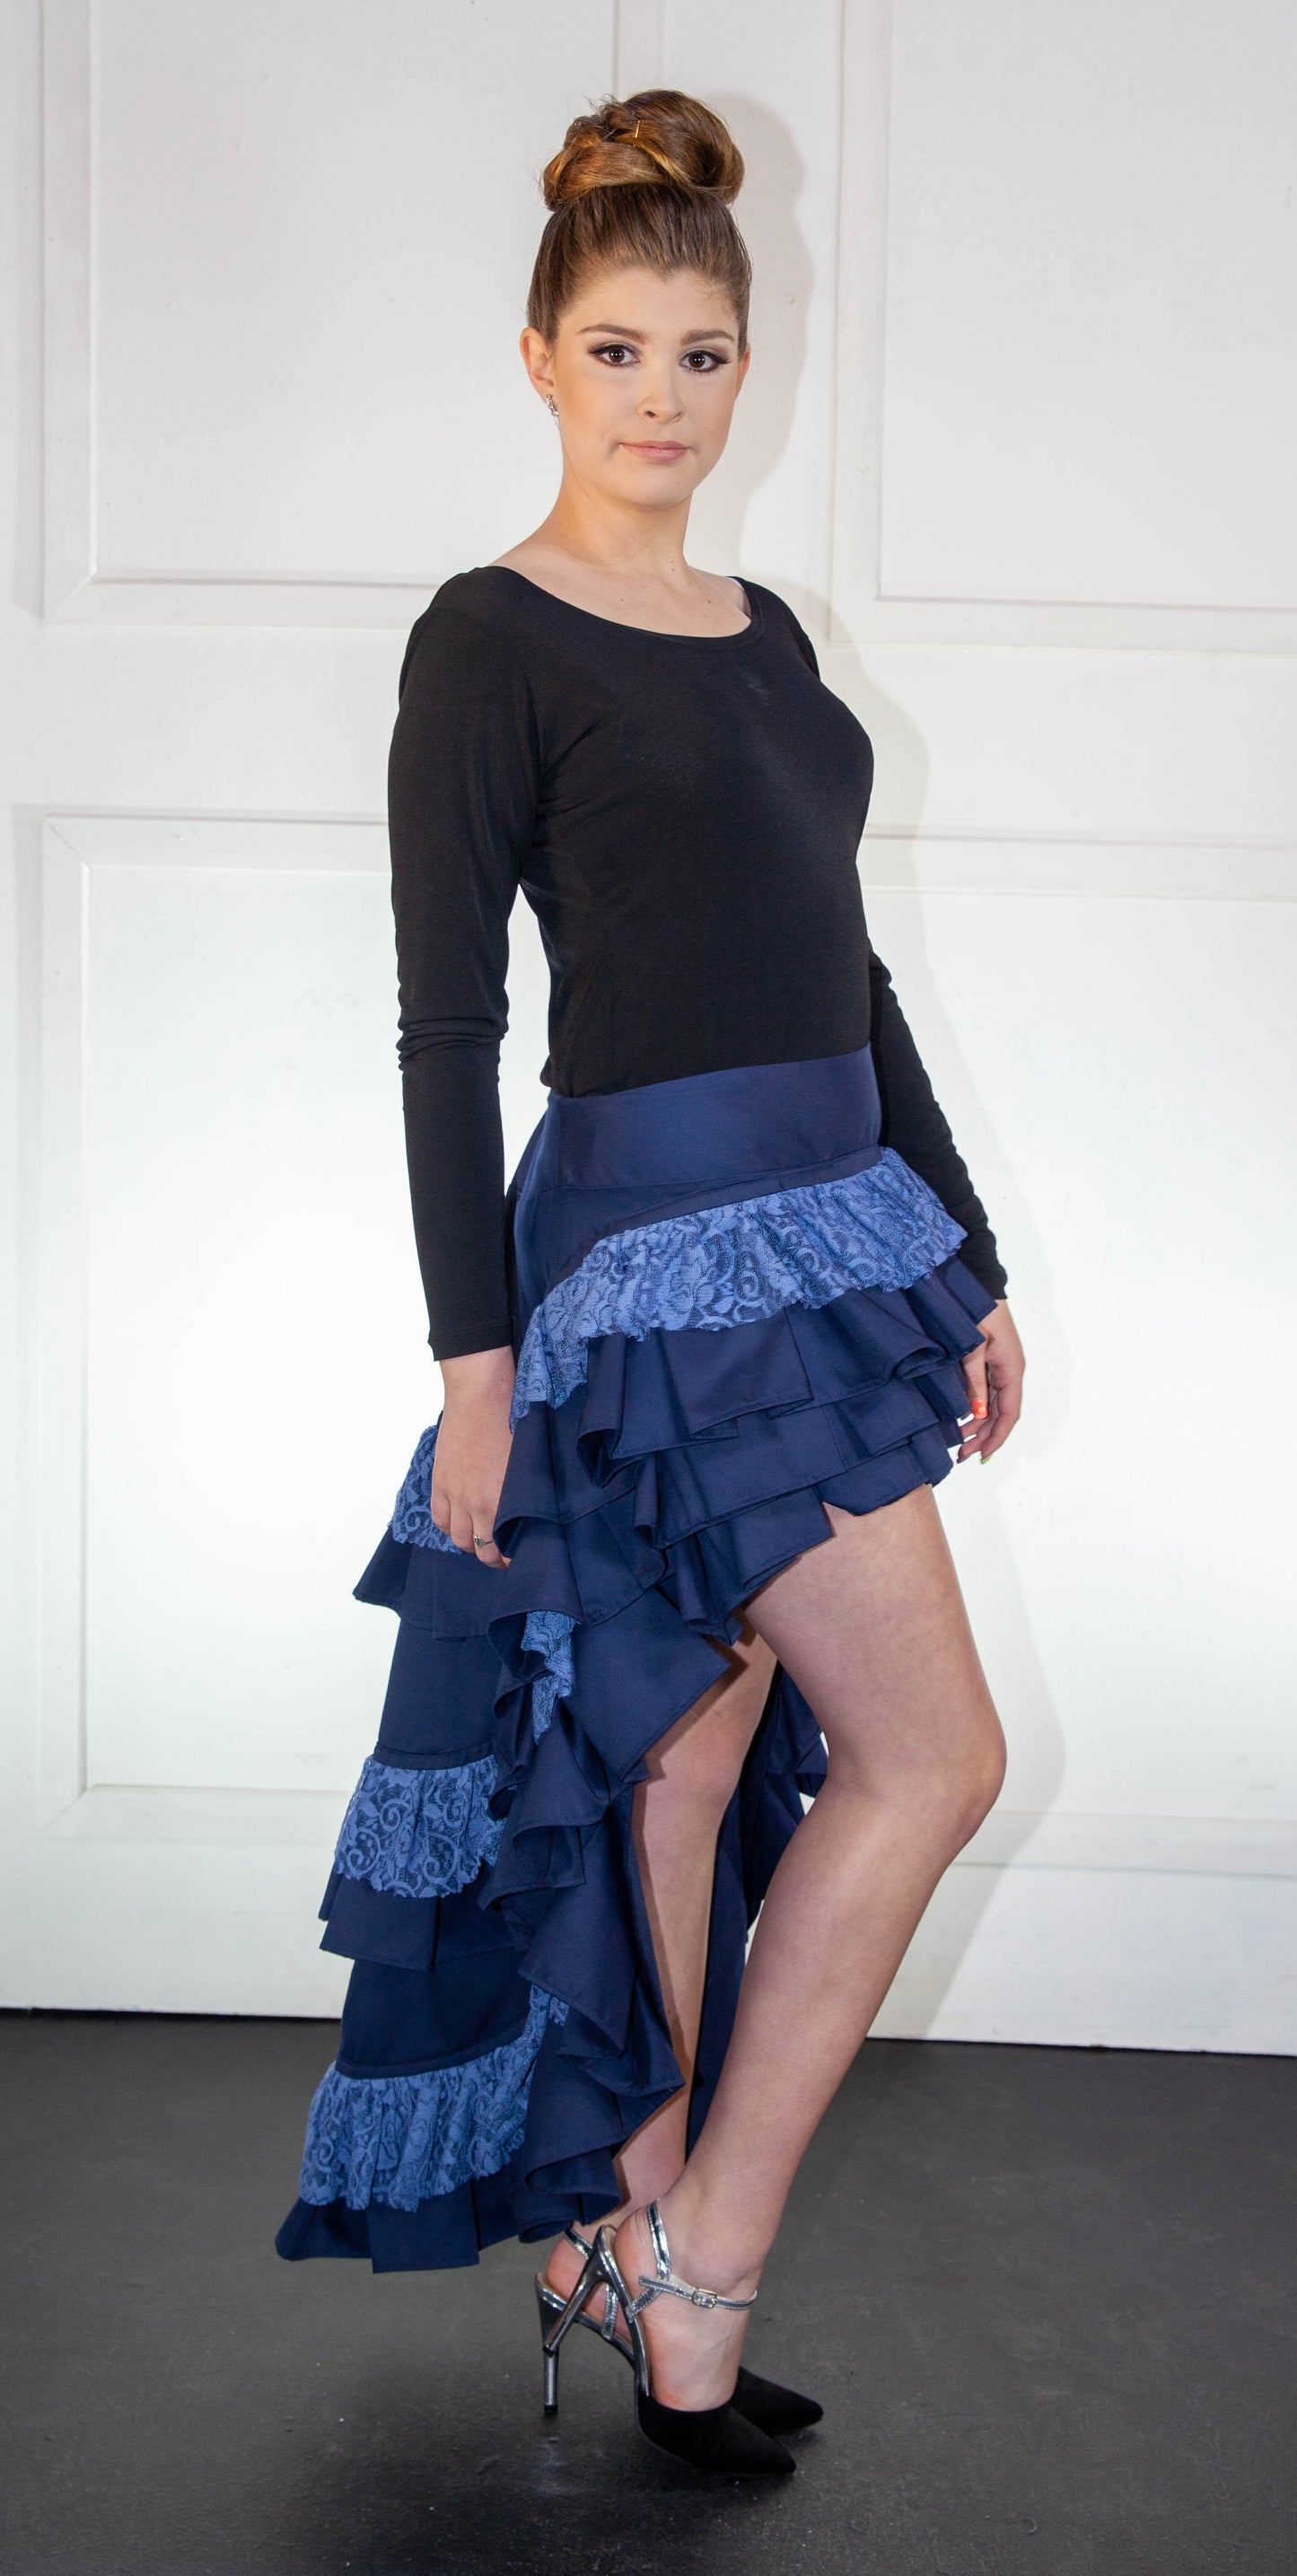 Skirt - Victorian High Low Navy Blue